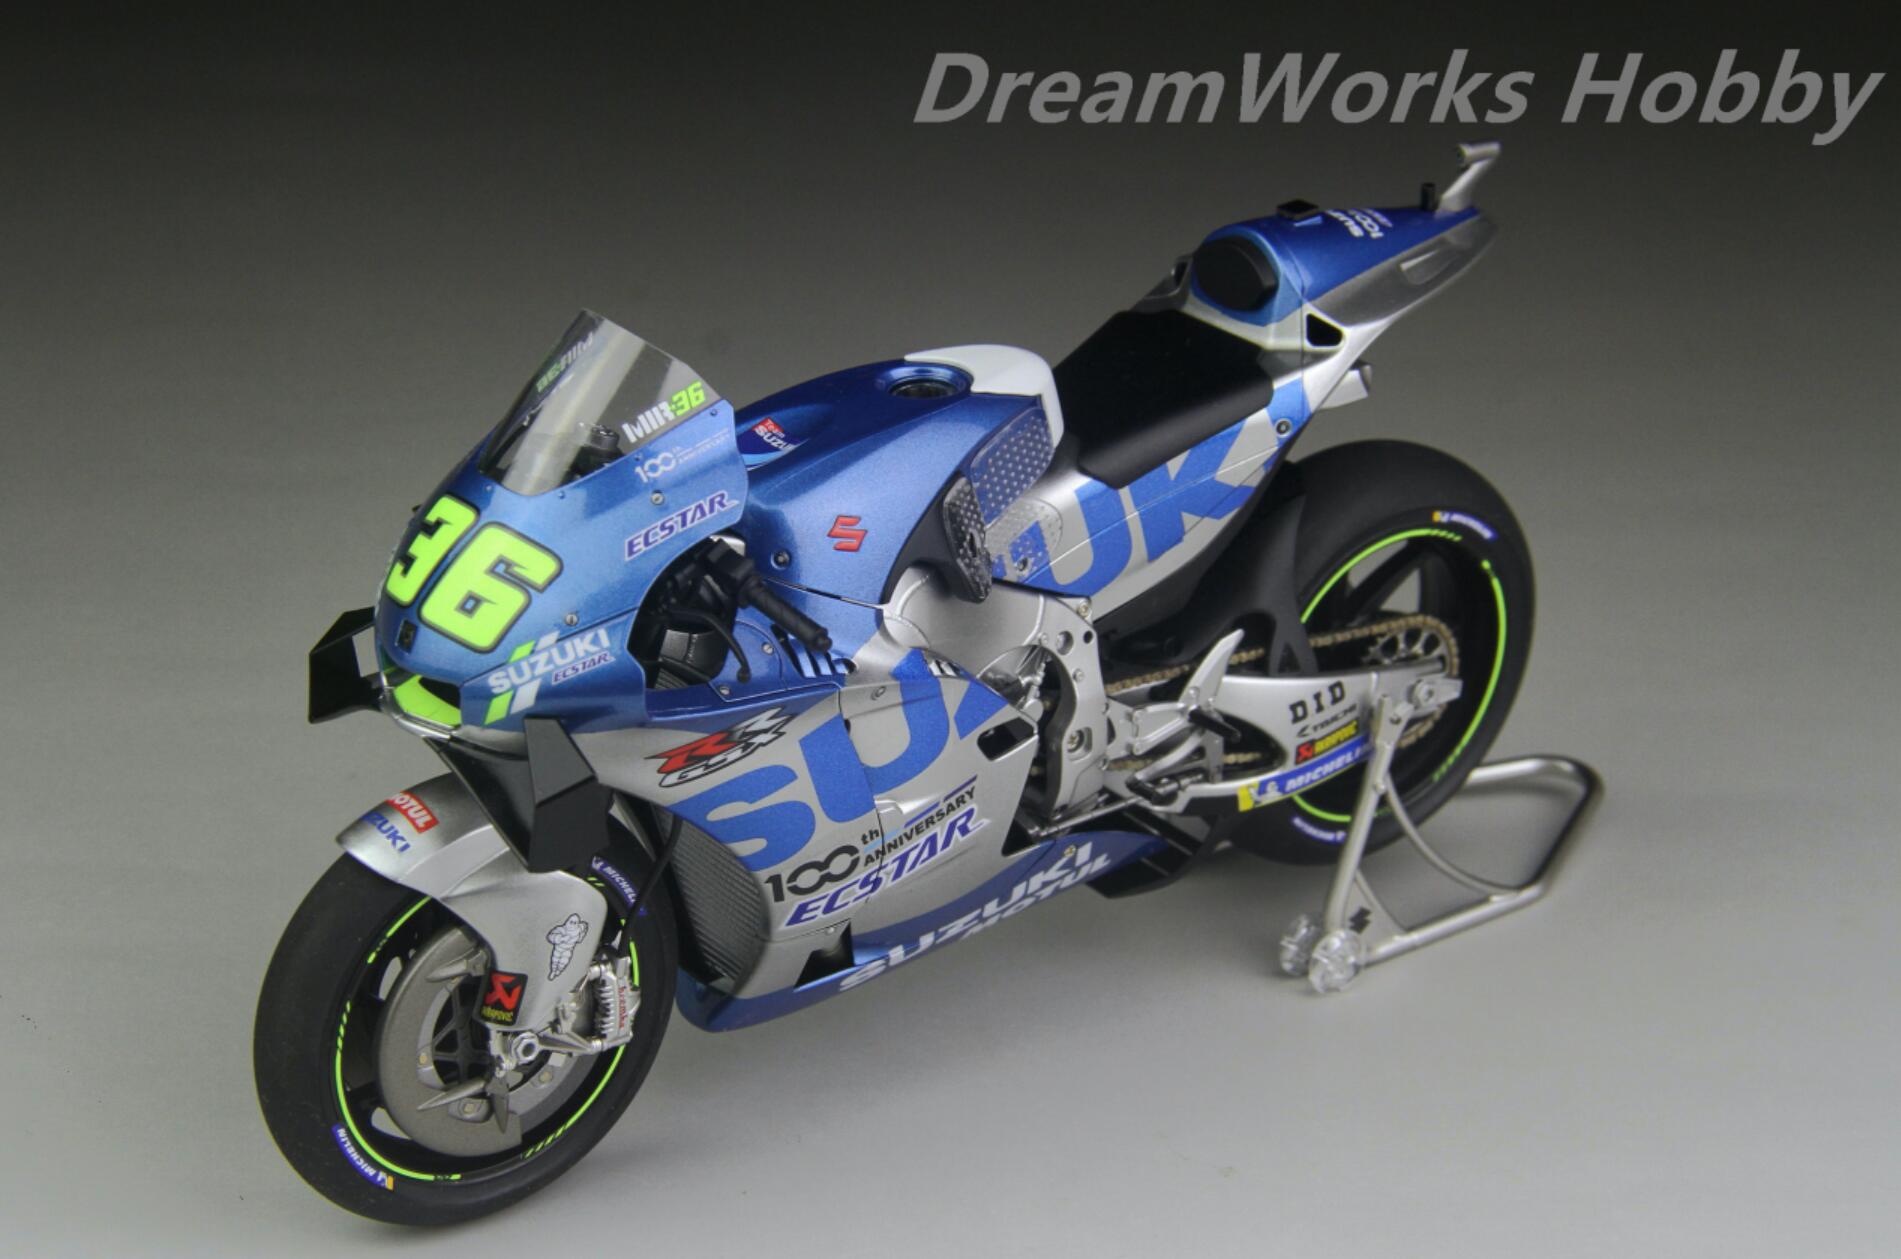 Build a Tamiya SUZUKI ECSTAR GSX-RR '20 MotoGP 1/12 - Joan Mir 36 - Miniature  MotoGP 